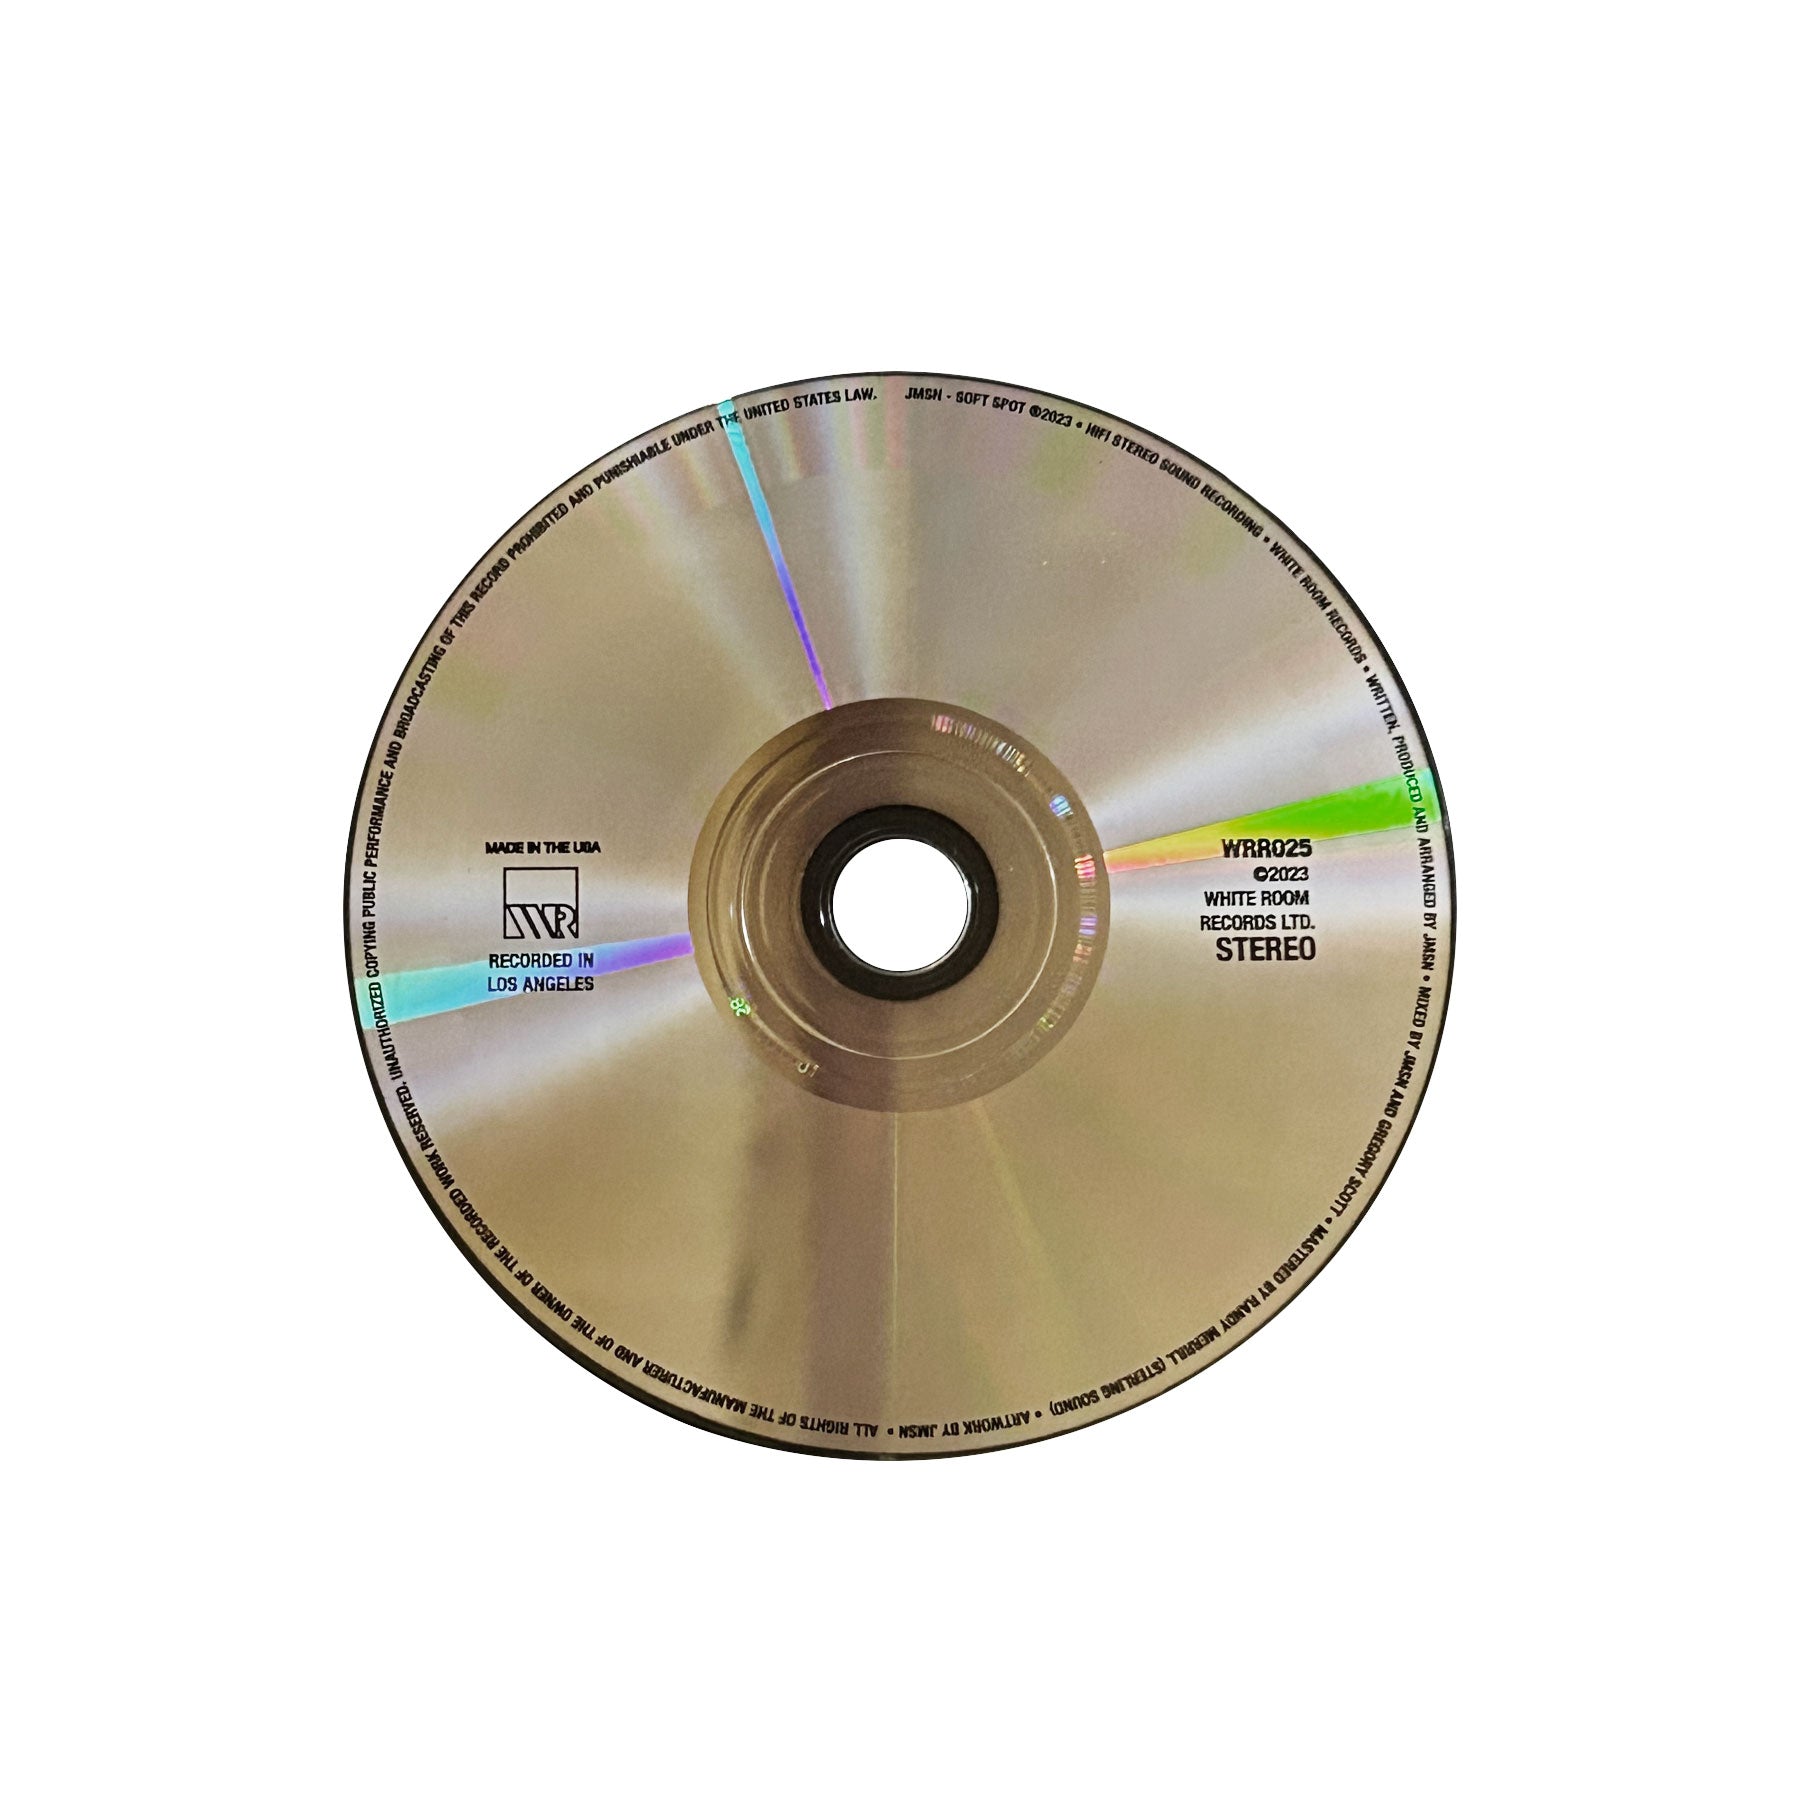 JMSN - Soft Spot [CD]